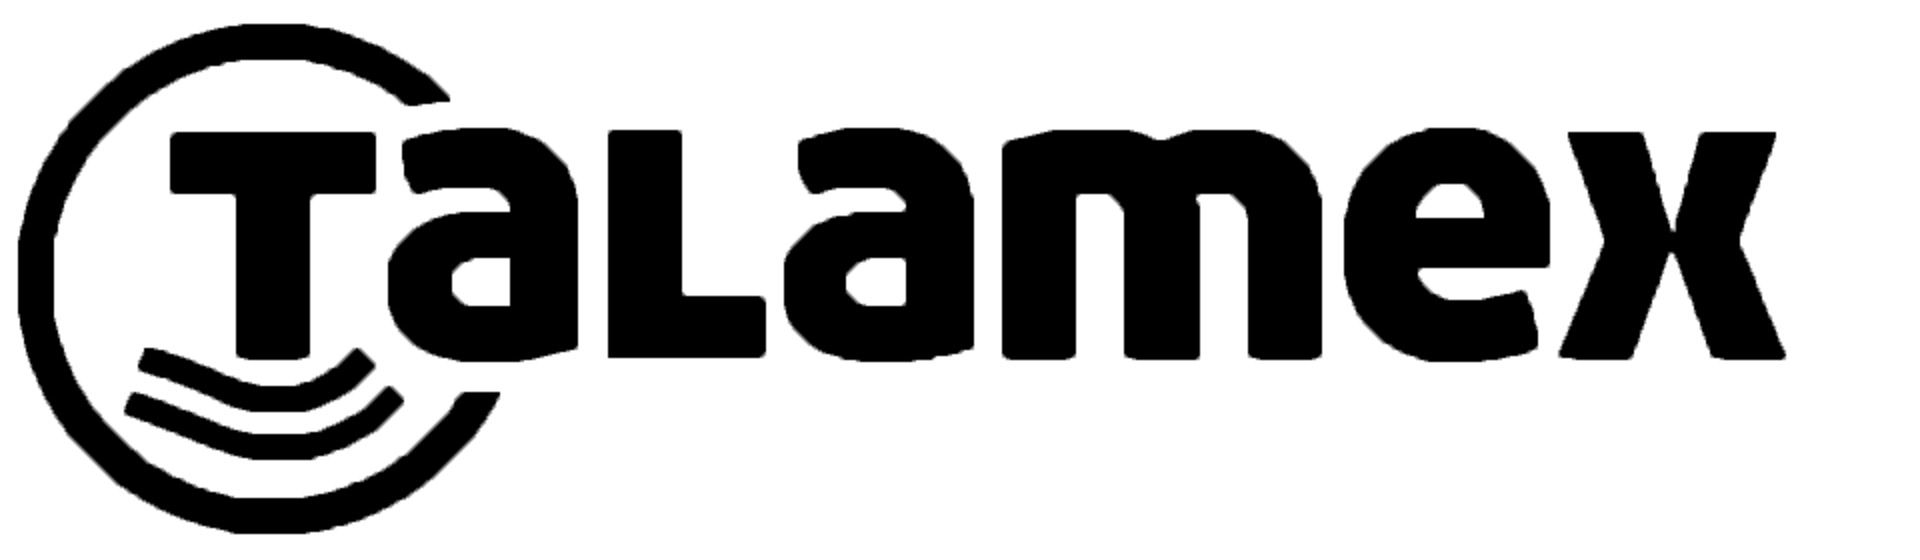 talamex logo